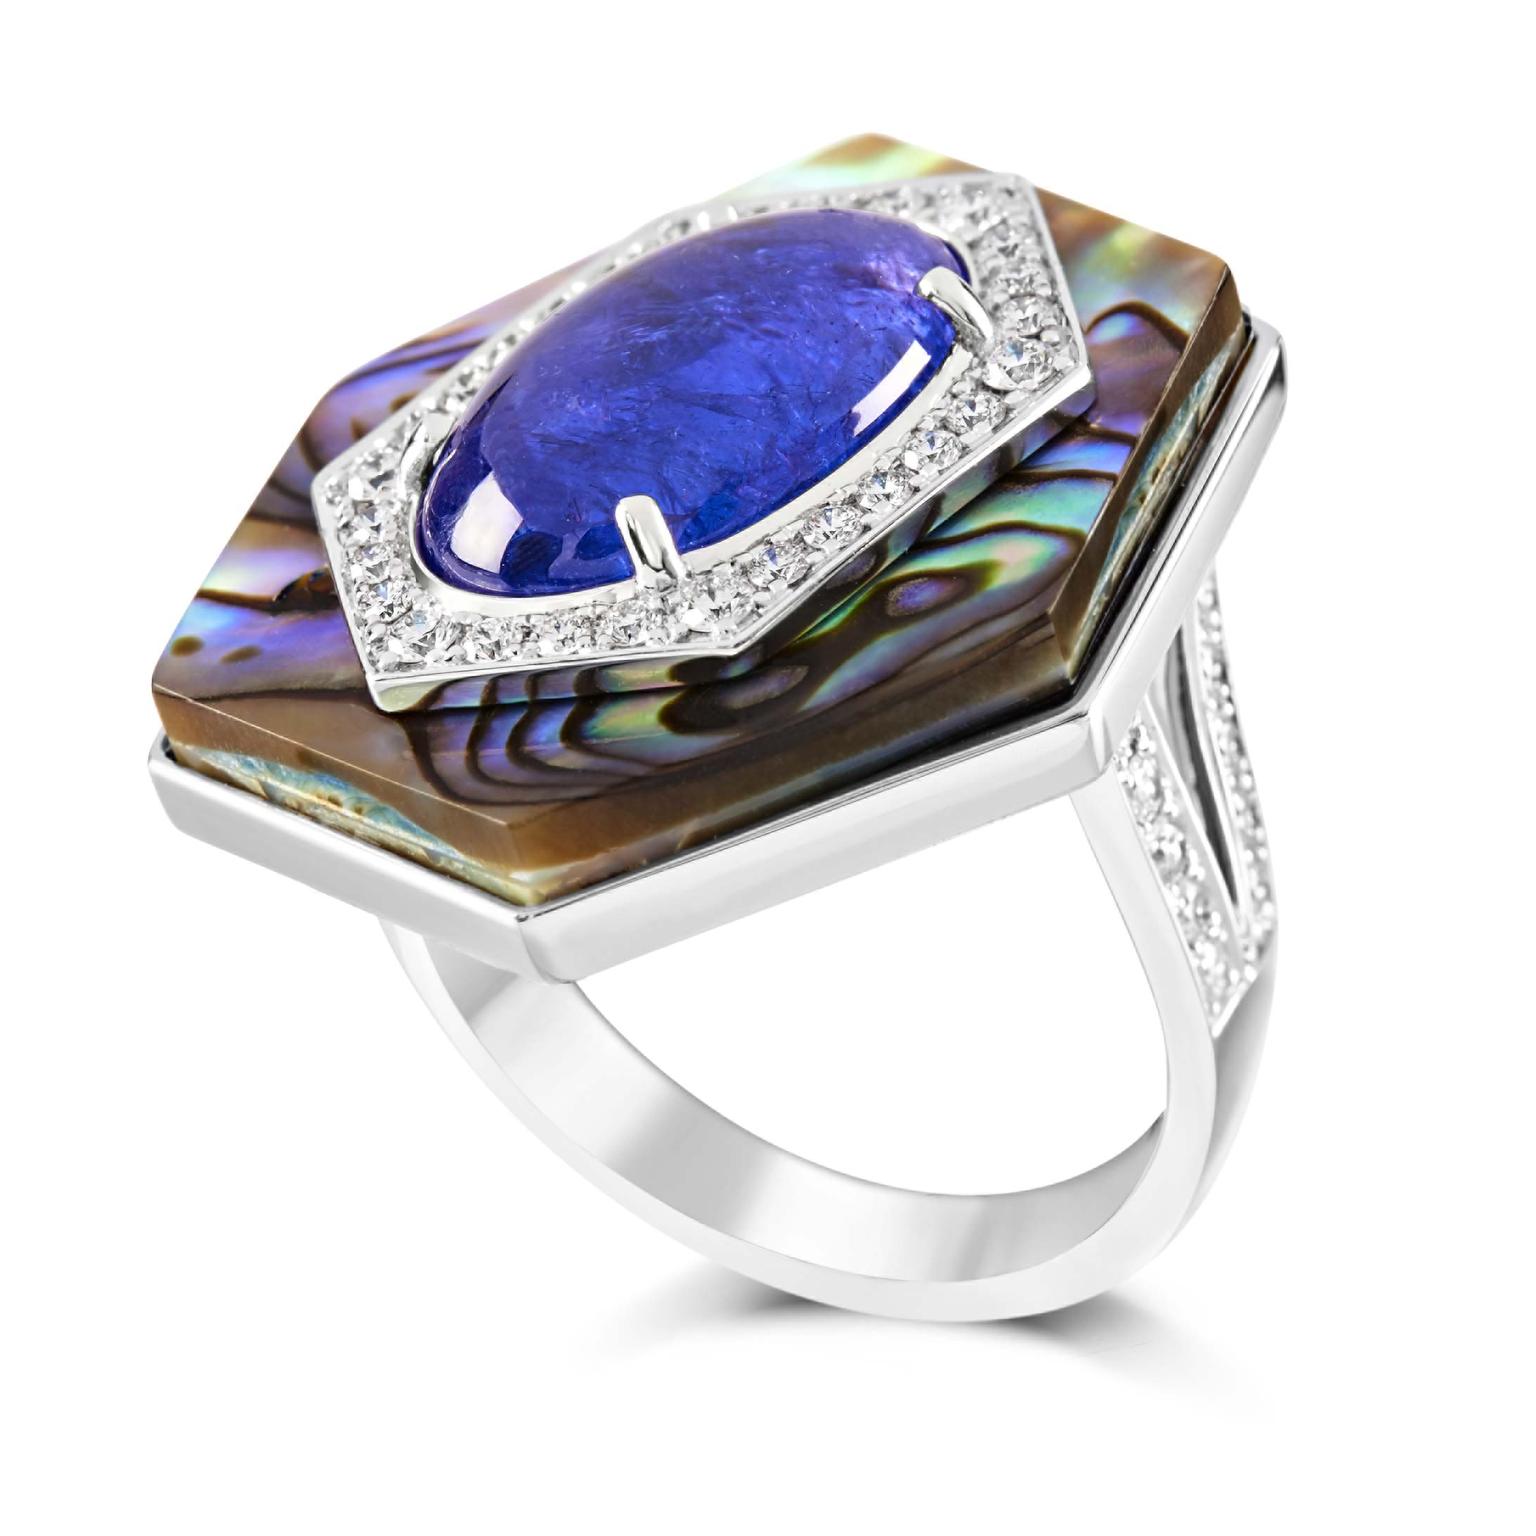 Engagment ring with tanzanite and diamonds from Ananya